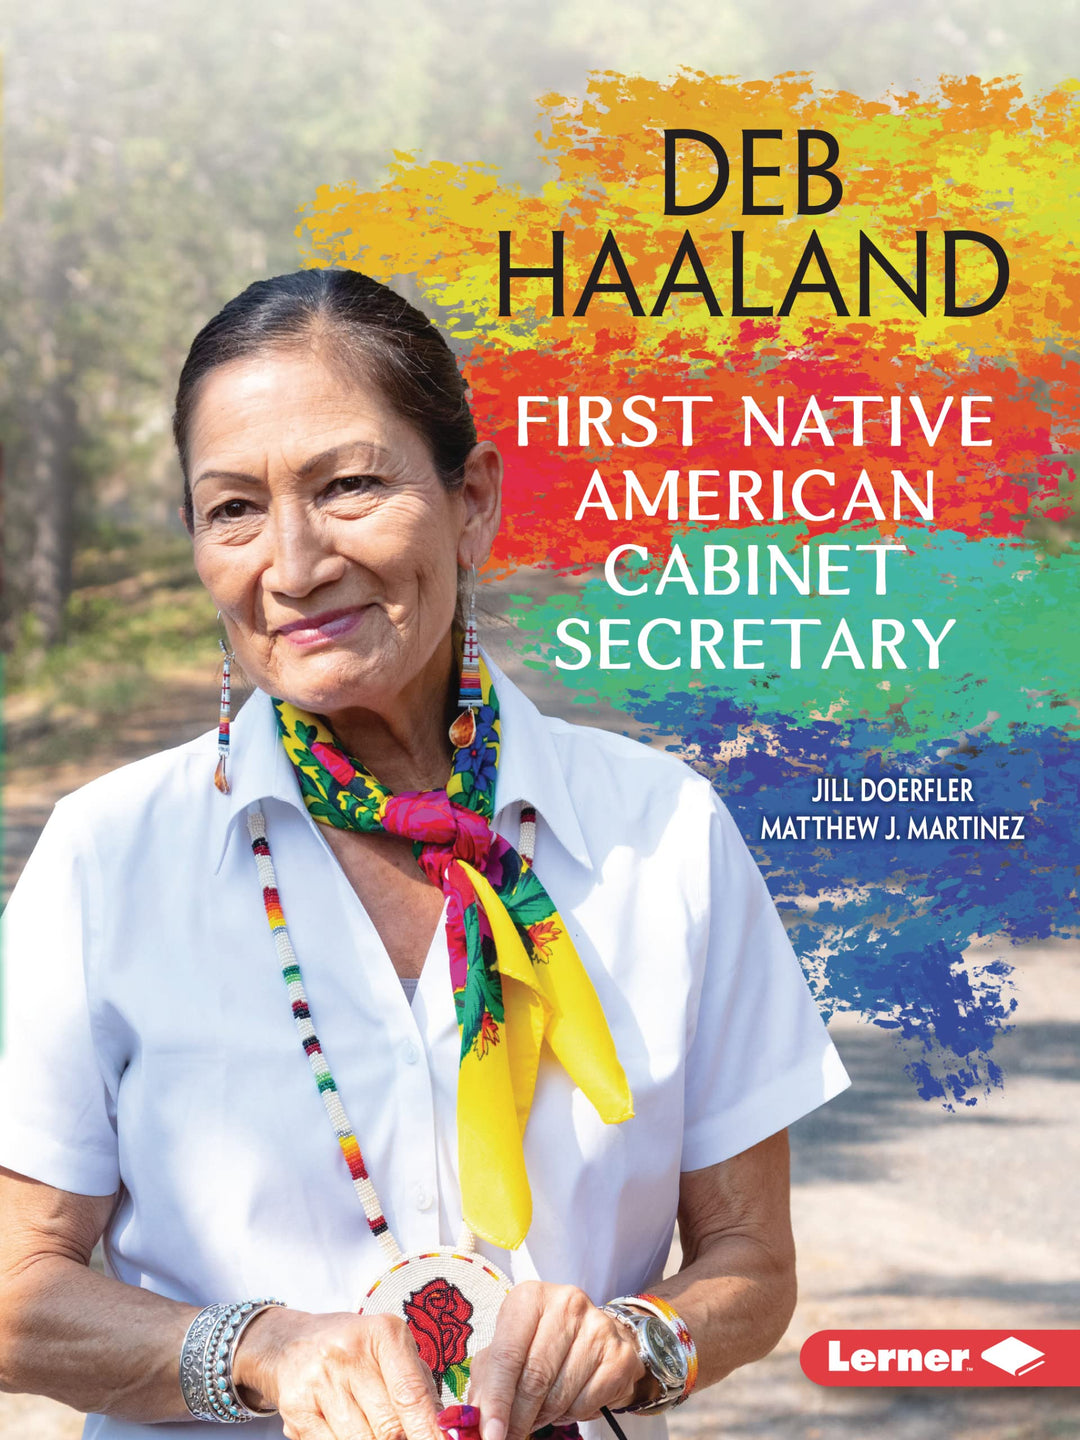 Deb Haaland: First Native American Cabinet Secretary by Jill Doerfler & Matthew J. Martinez